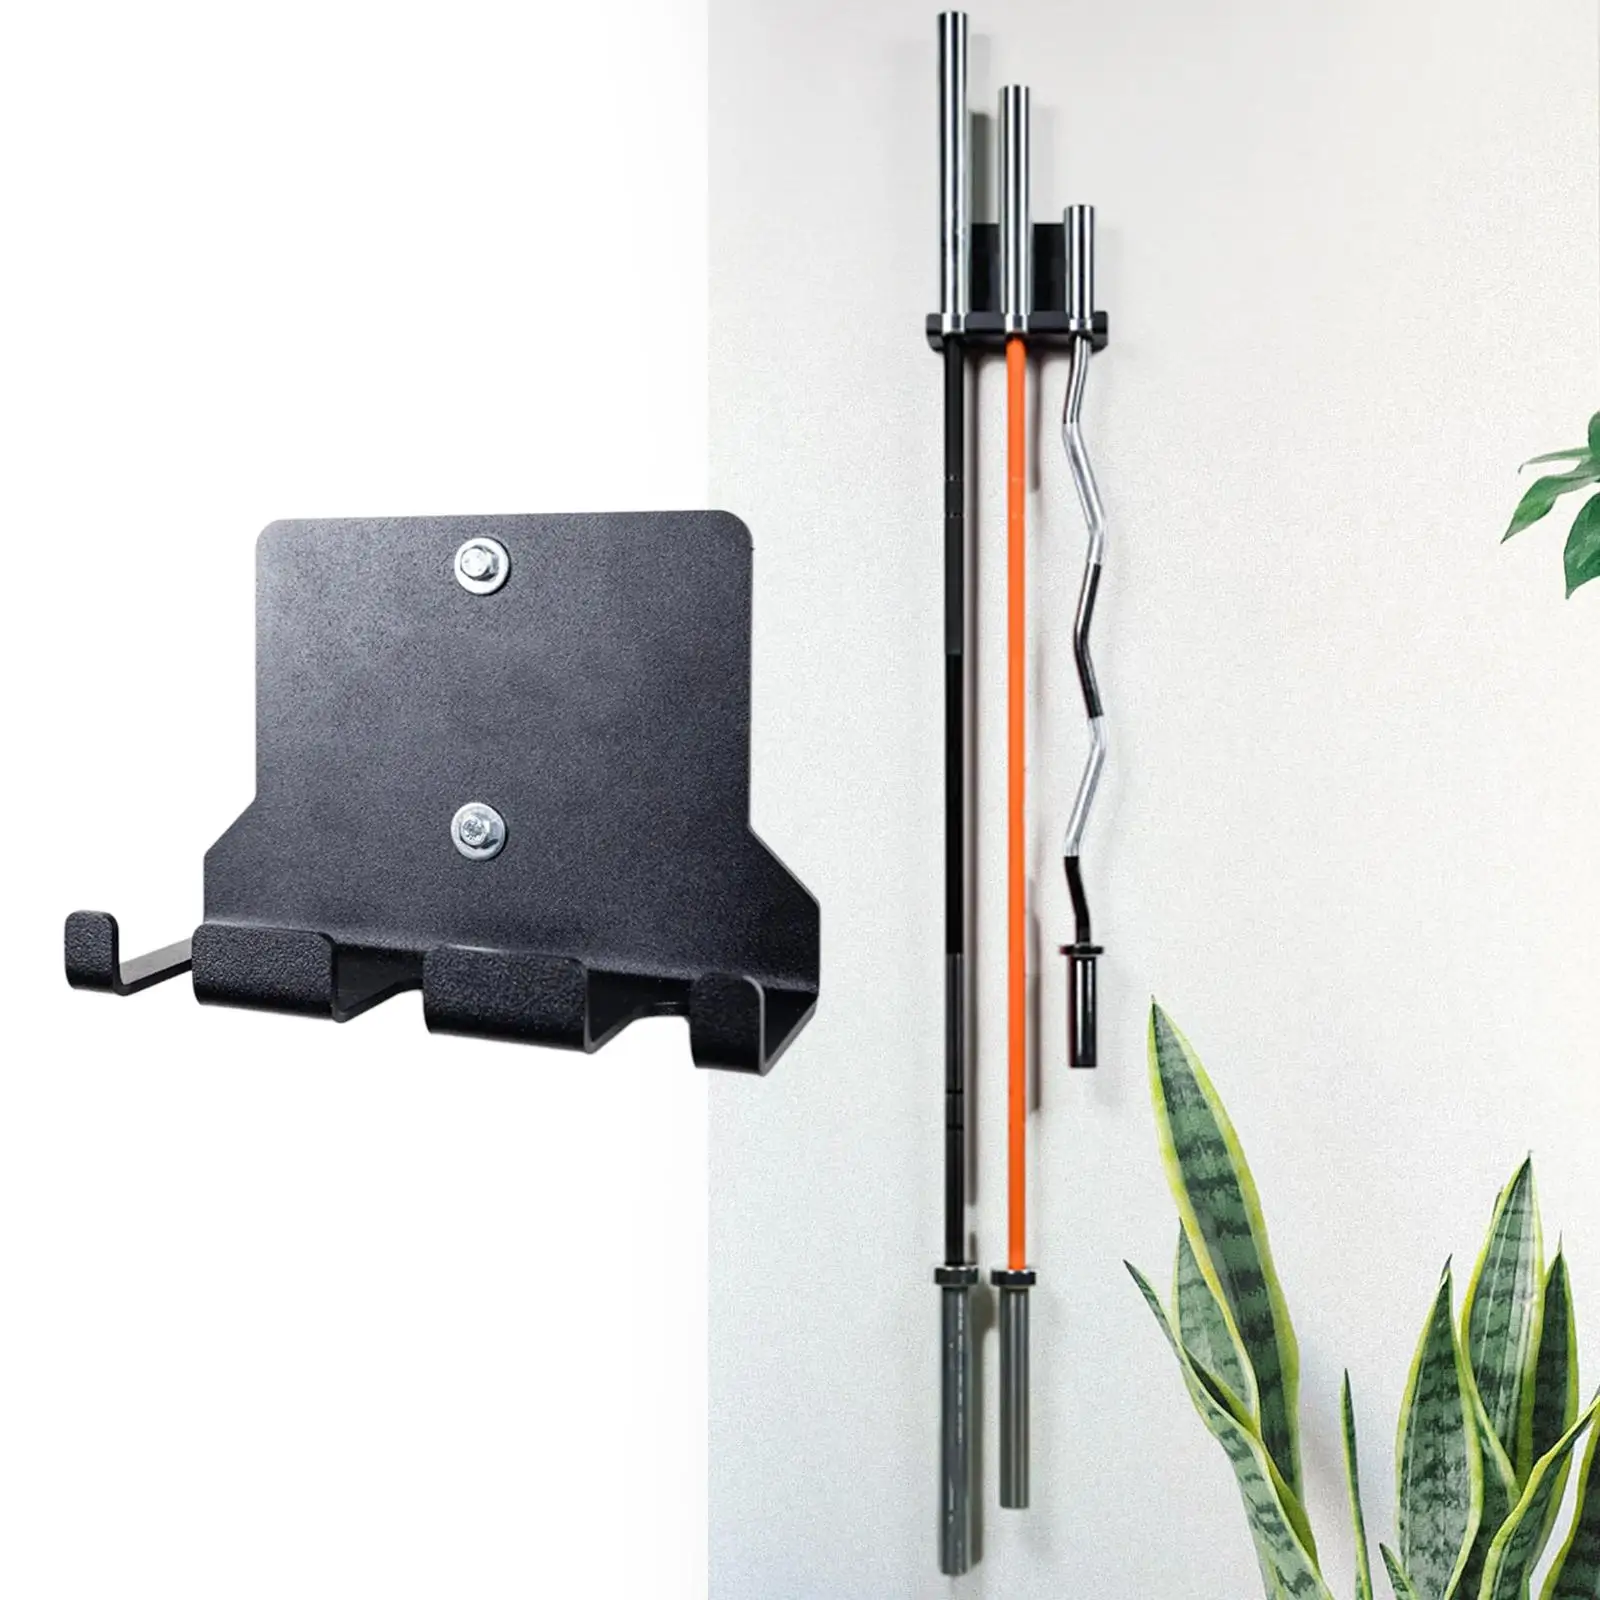 Barbell Storage Holder Rack Display Weight Bar Holder Hanging for Commercial